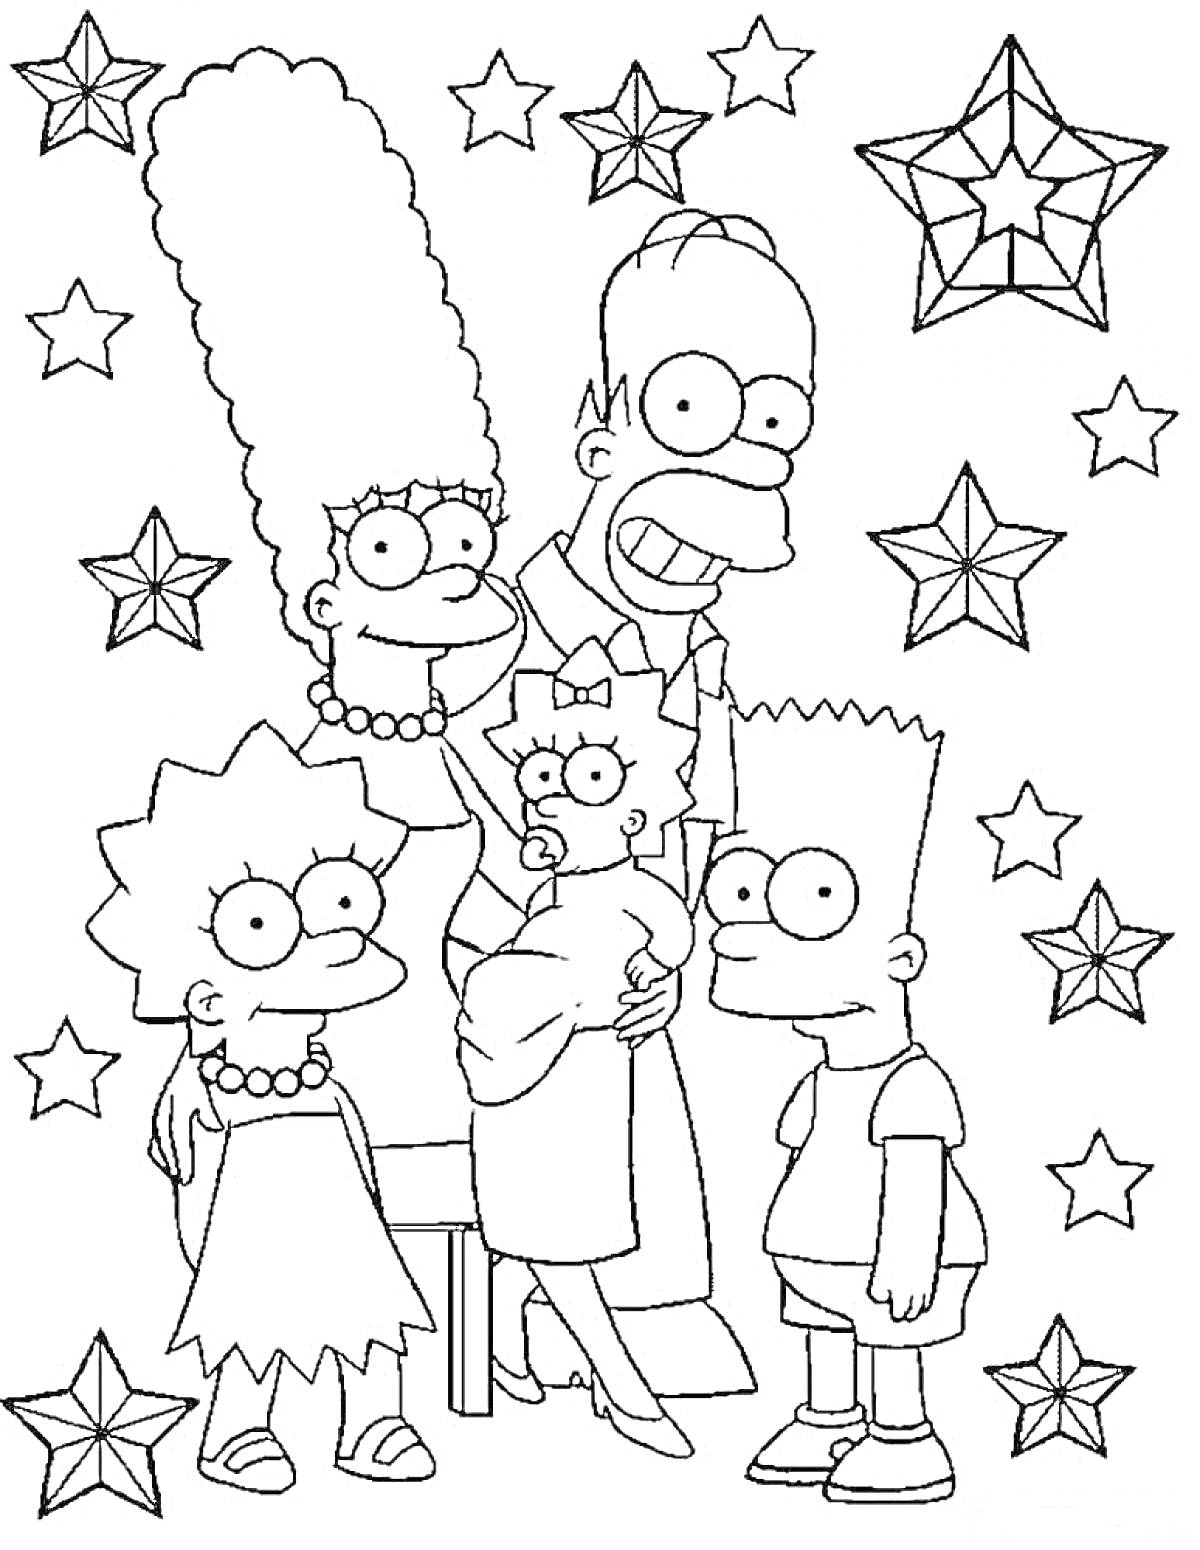 Раскраска Семья Симпсонов на фоне звезд